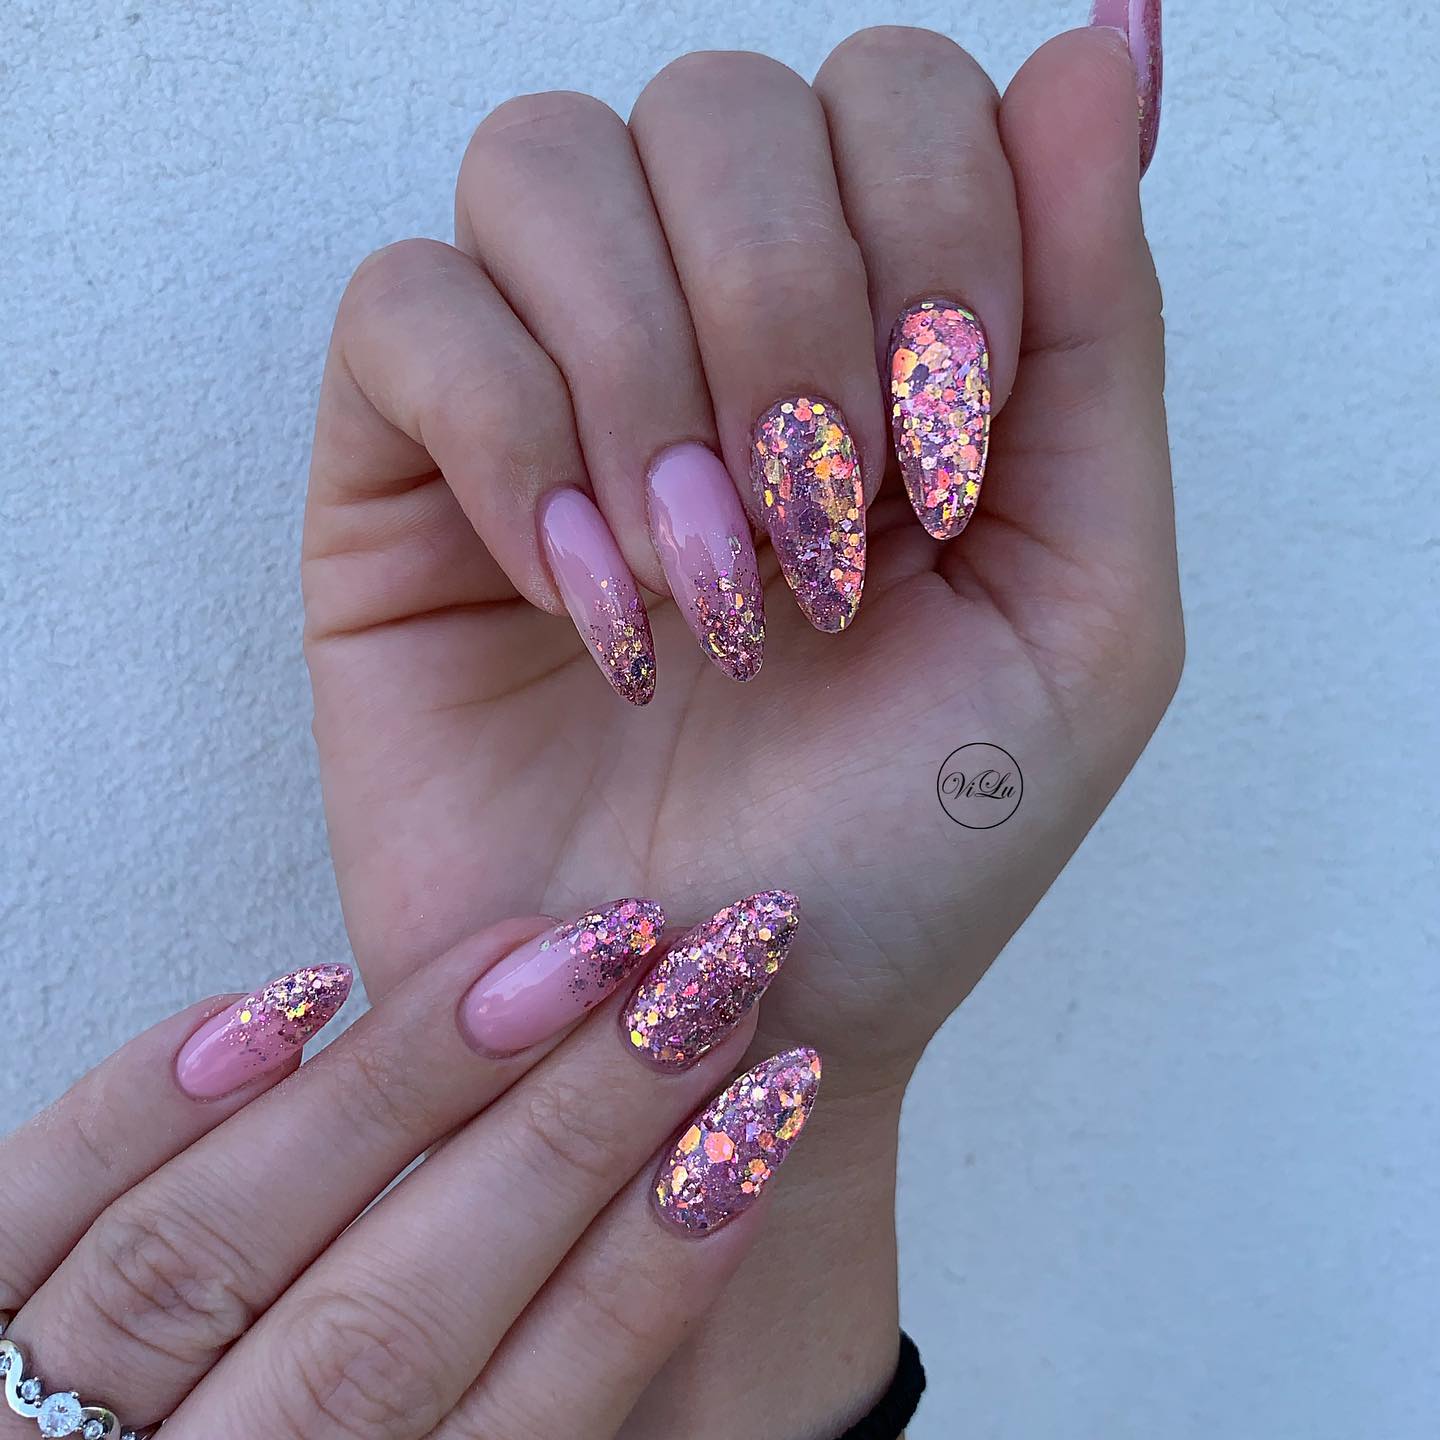 Roze nagels met roze glitterontwerp